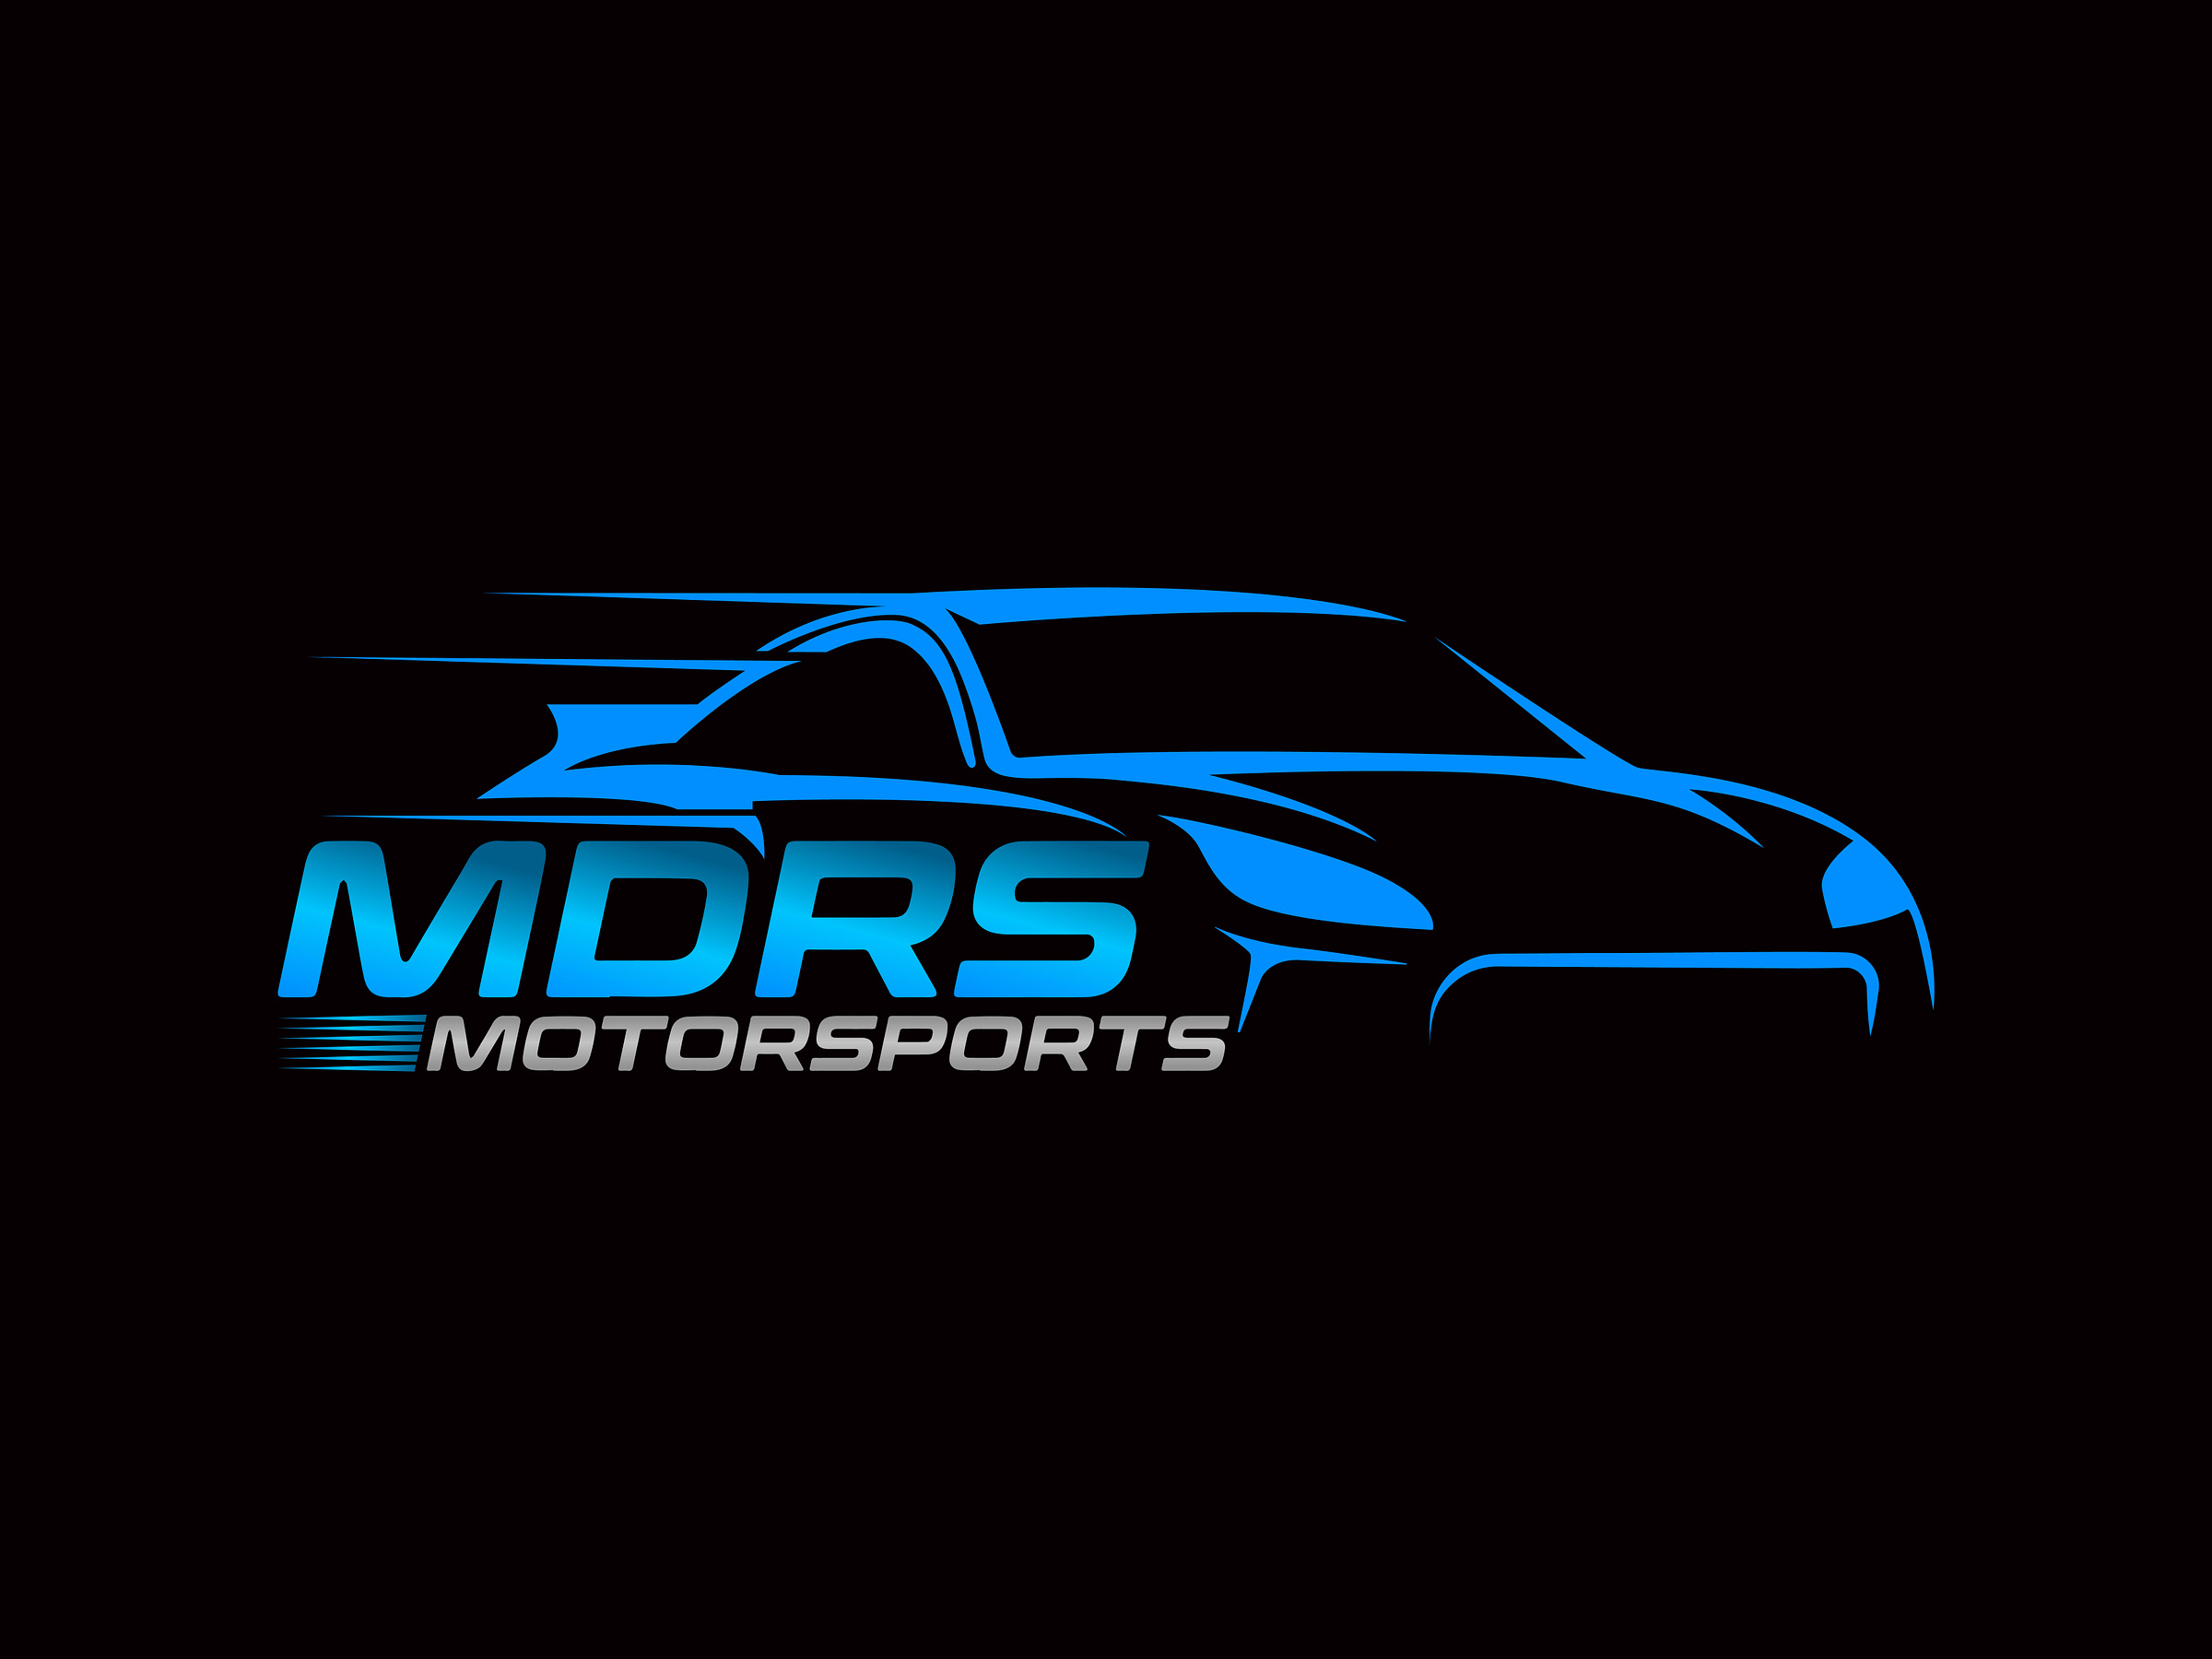 MDRS Motorsports Logo | Unleashing Automotive Thrills by Md. Hashemi ...